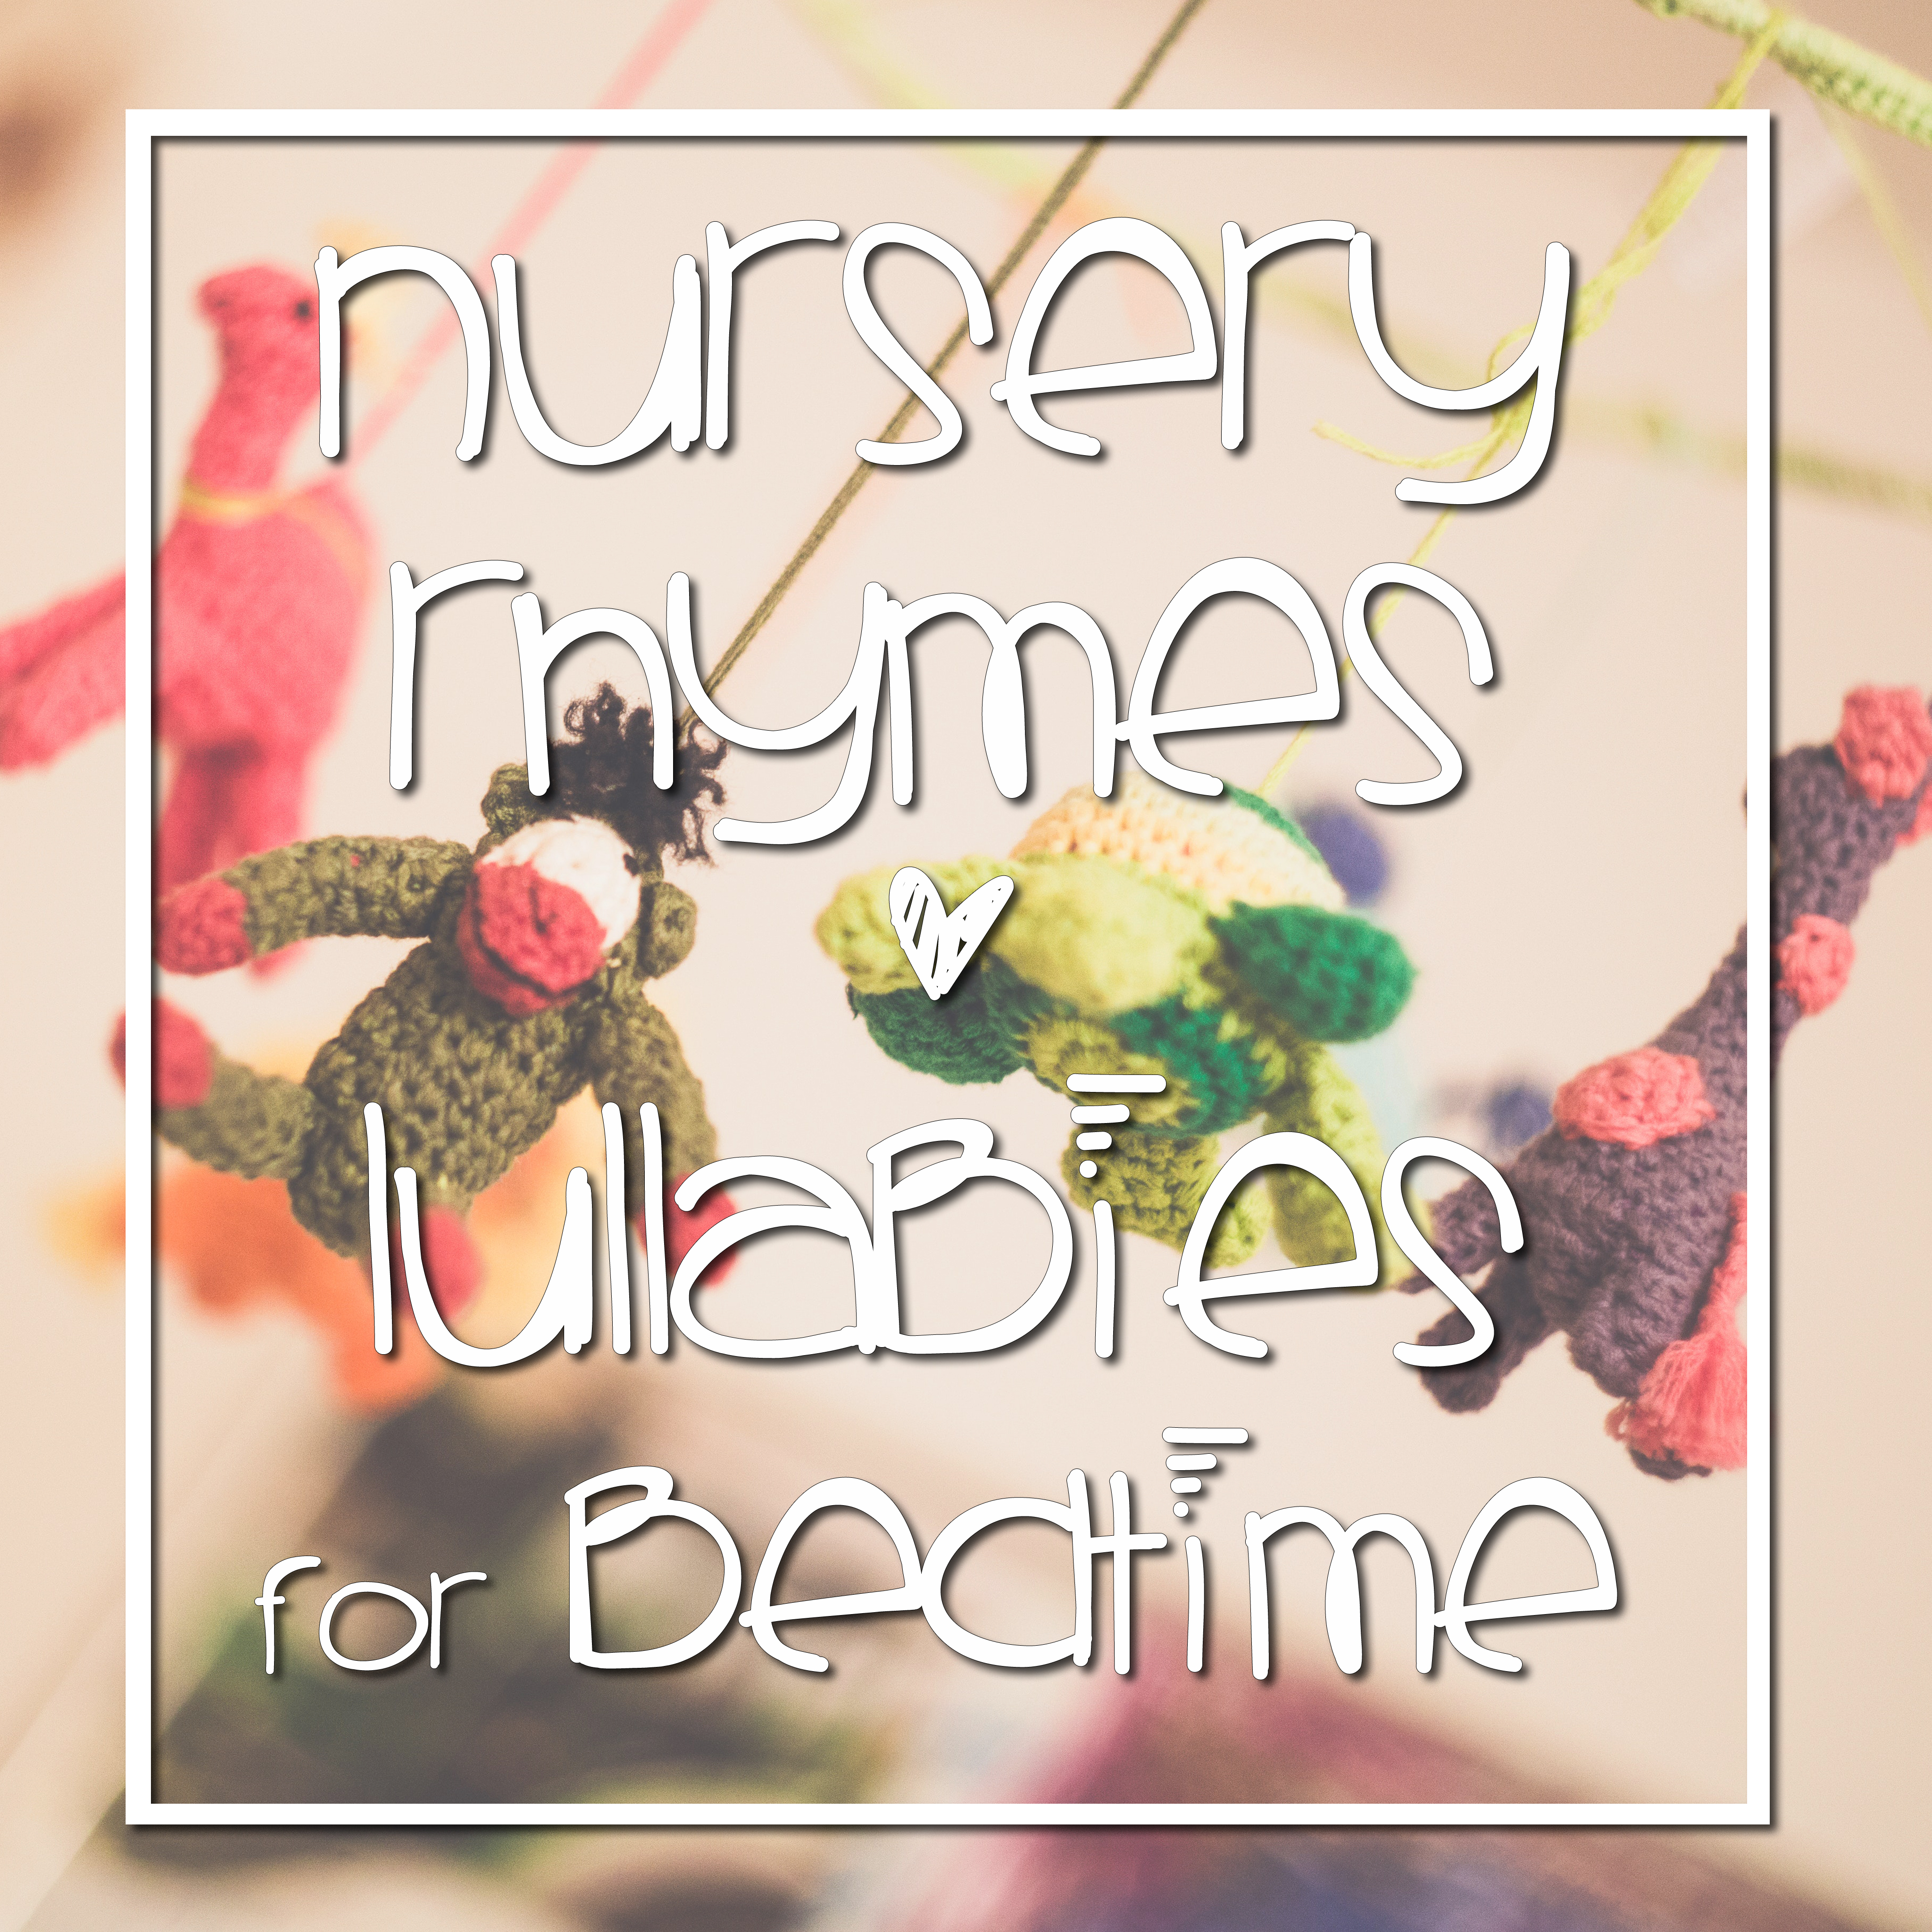 15 Nursery Rhymes and Lullabies for Bedtime